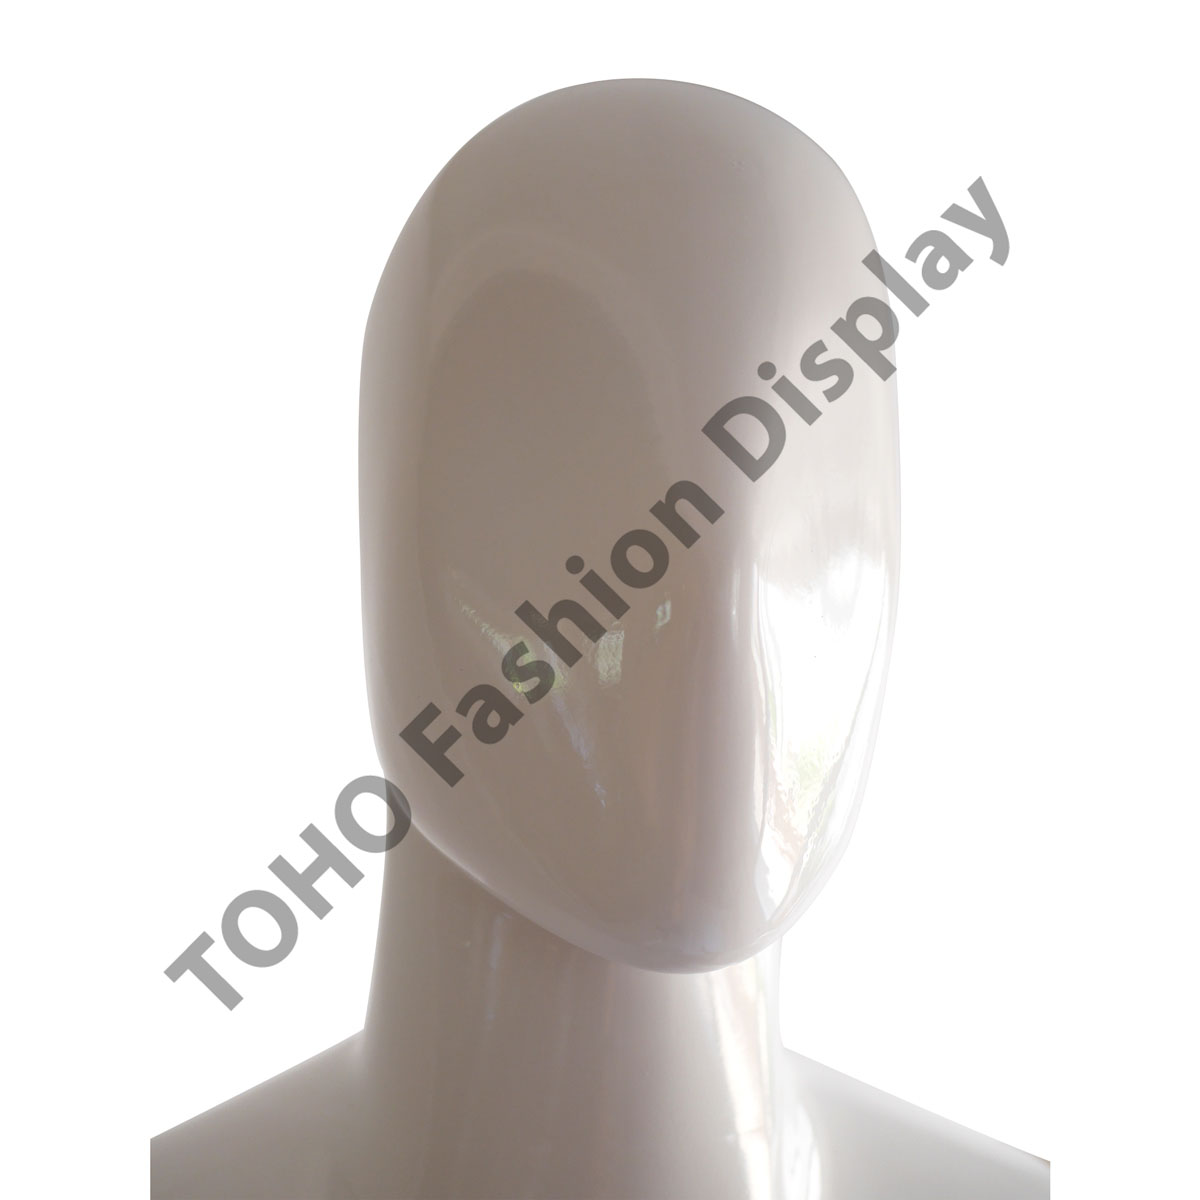 Mannequin Alien Laki Putih Glossy 180 cm Toko Toho 